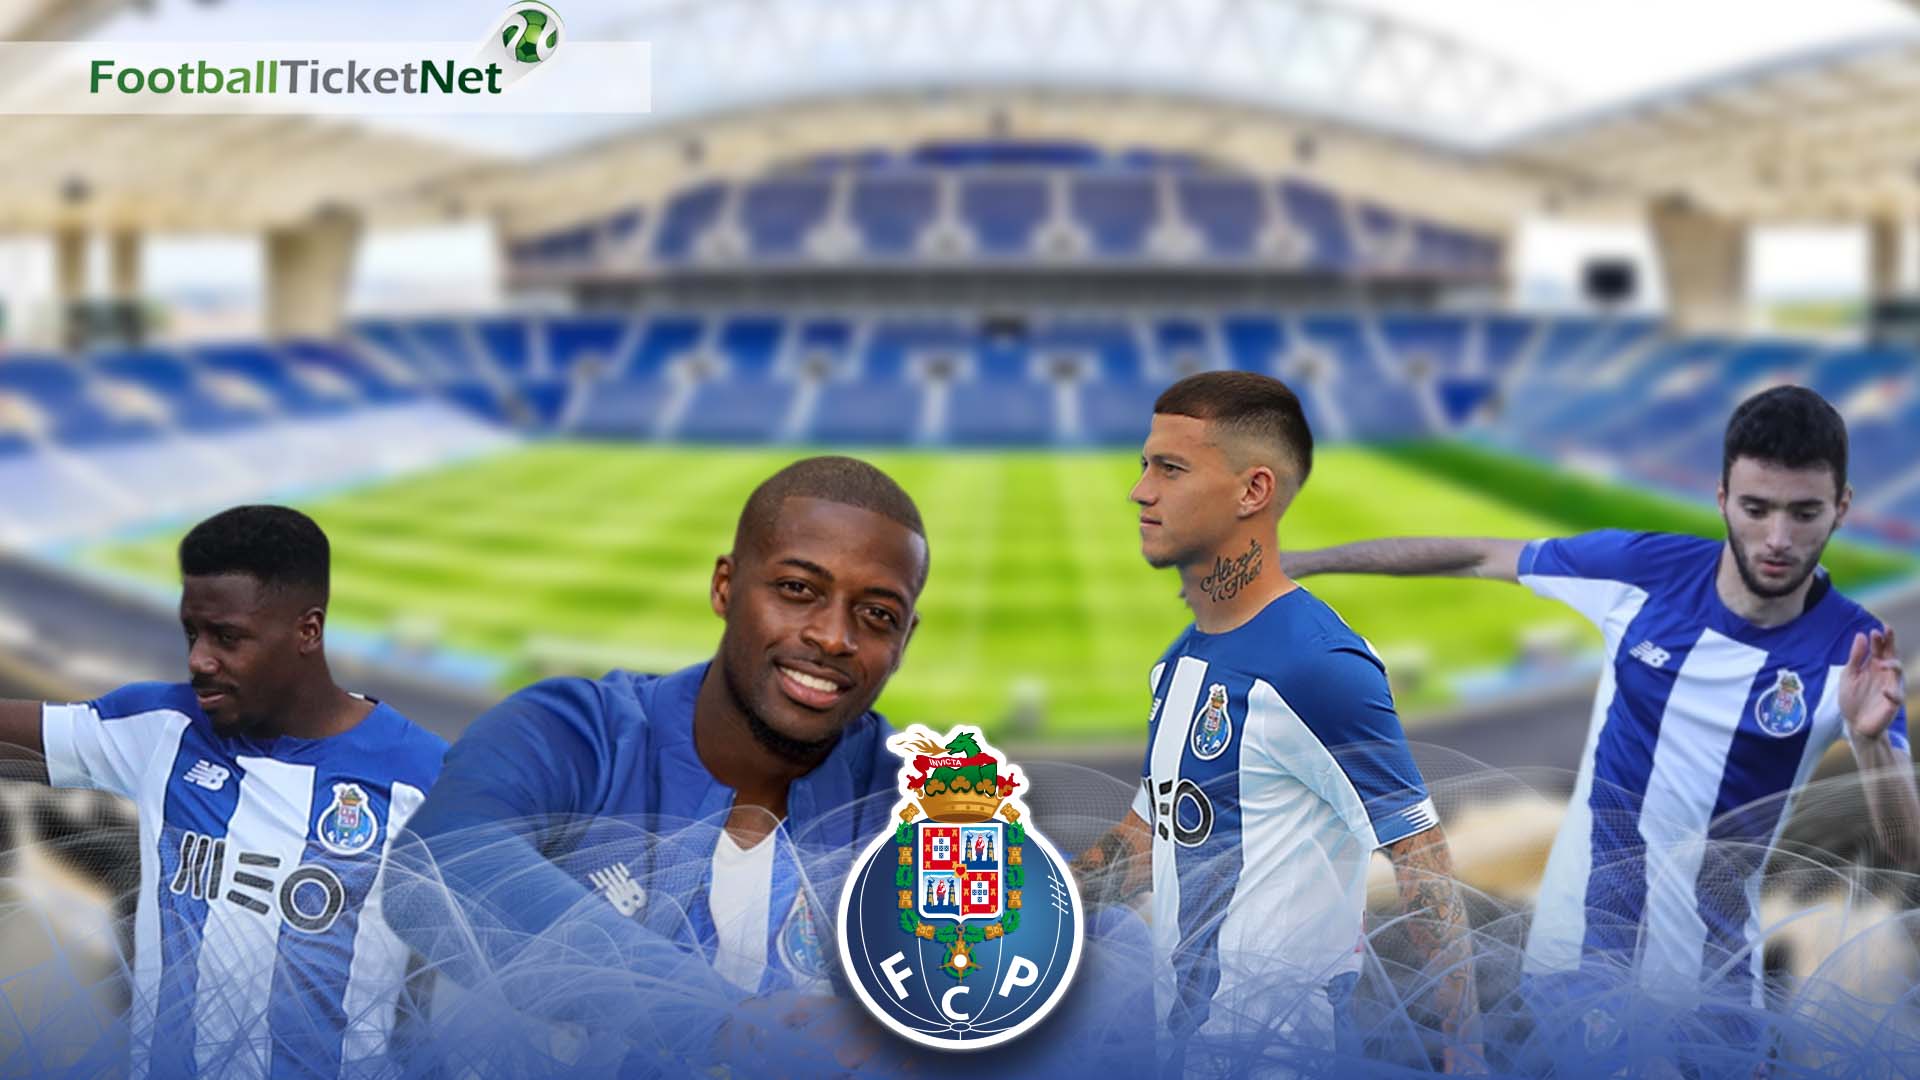 Buy FC Porto Tickets 2023/24 Football Ticket Net